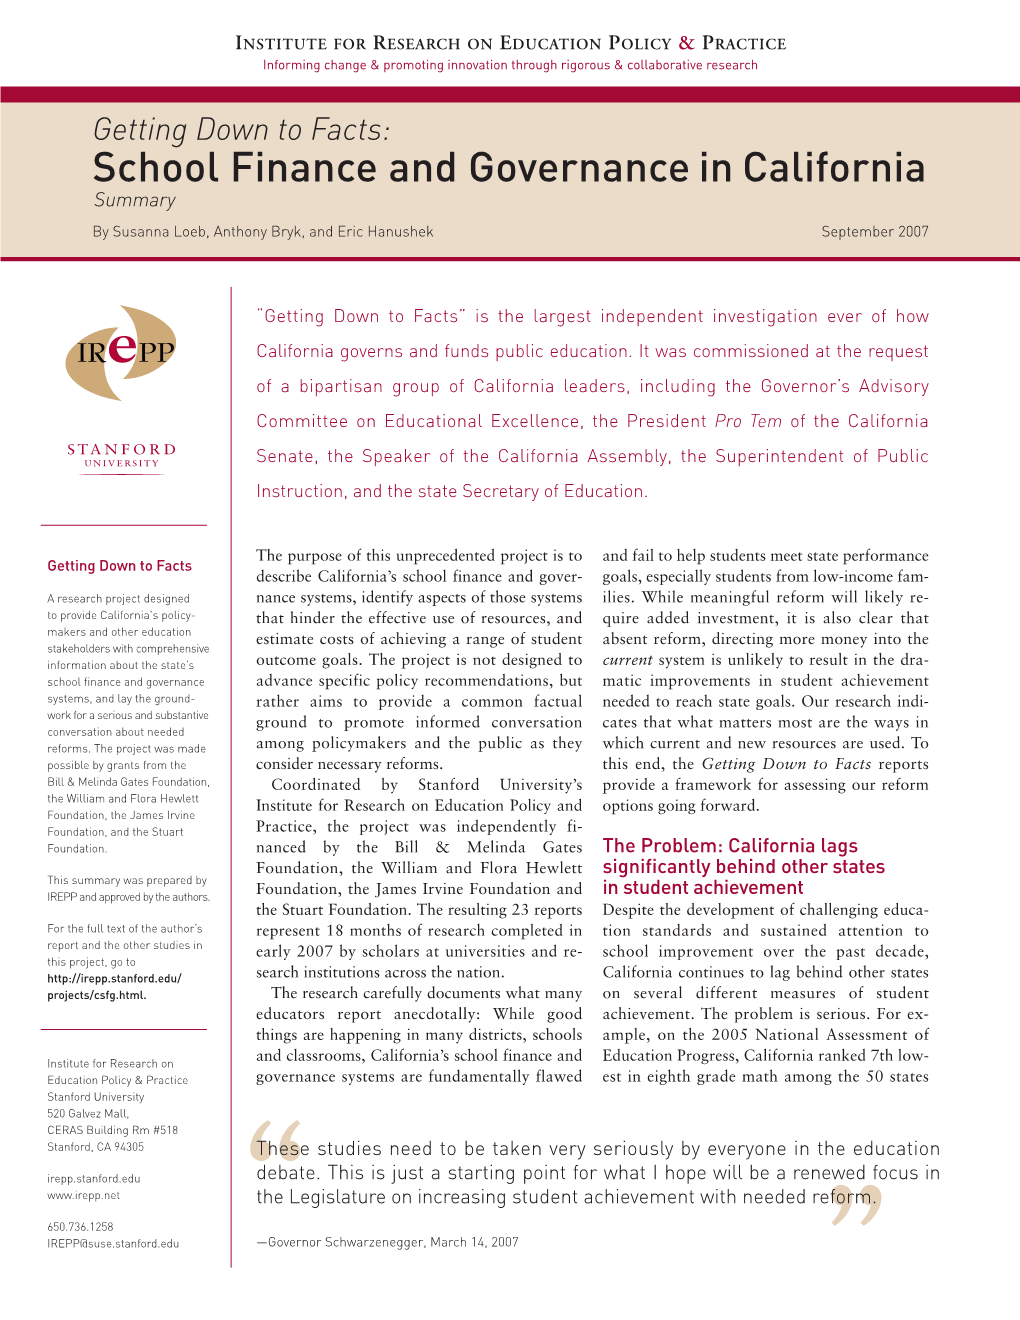 School Finance and Governance in California Summary by Susanna Loeb, Anthony Bryk, and Eric Hanushek September 2007